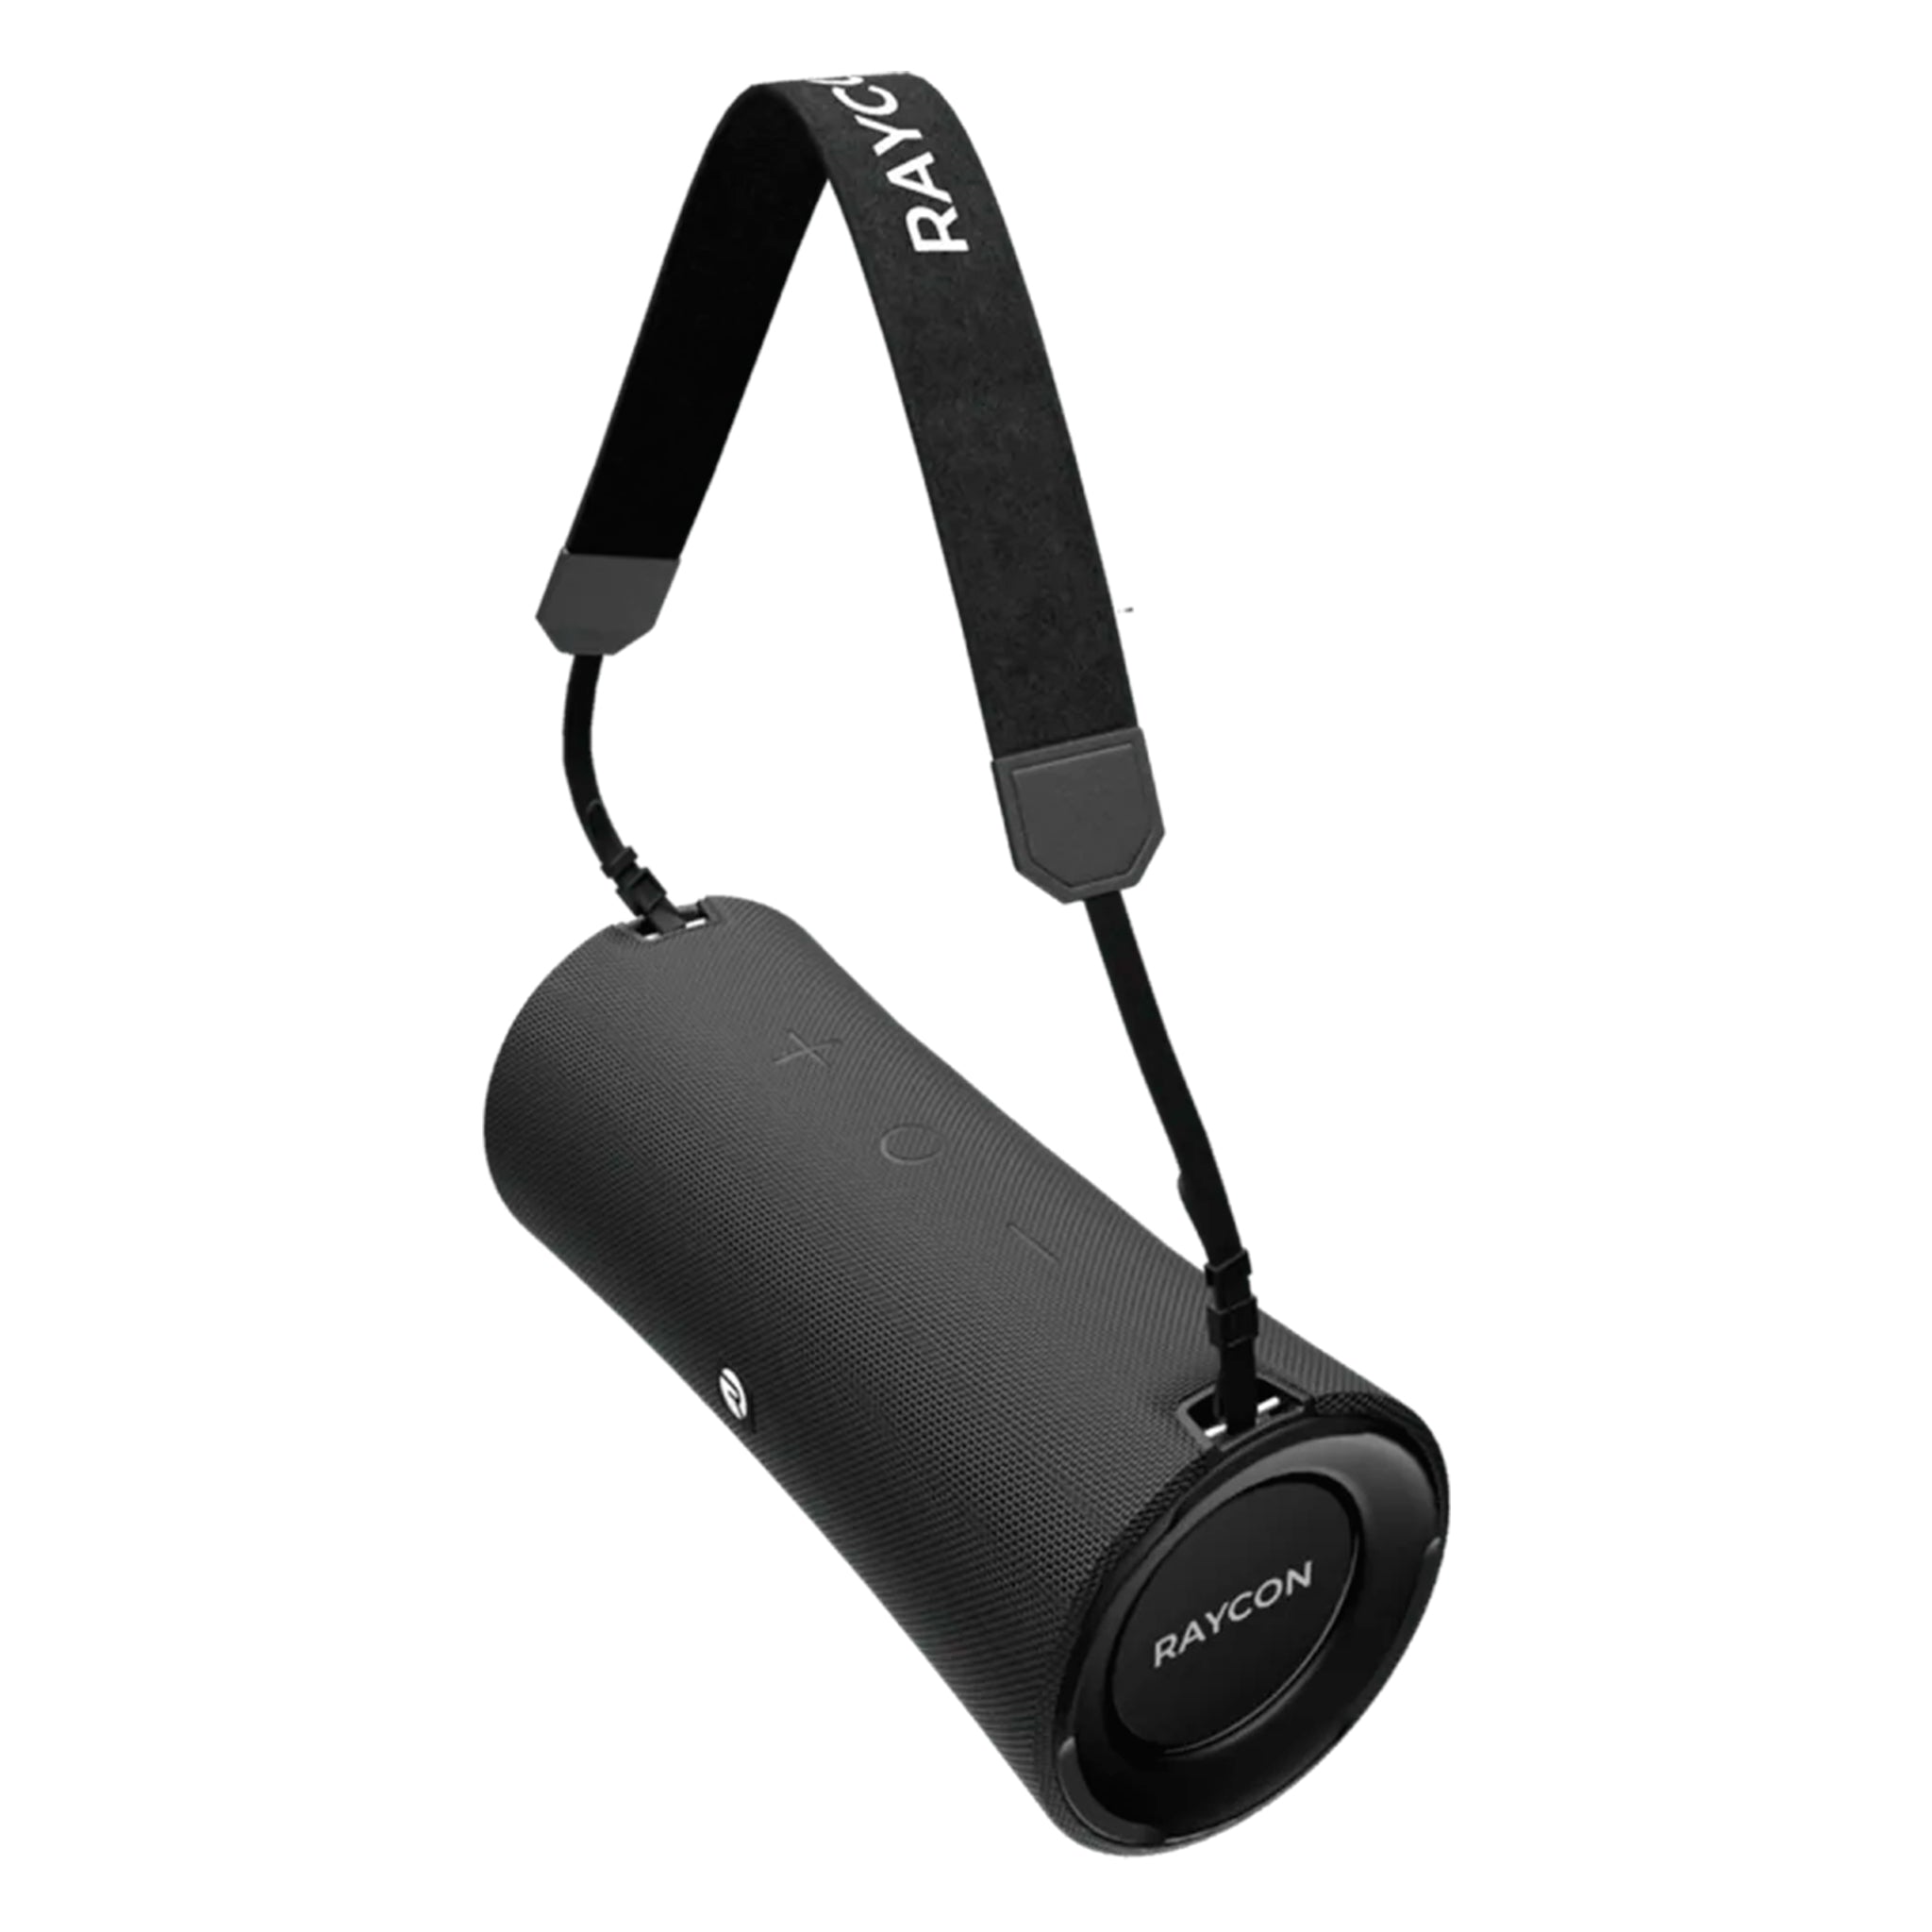 Raycon - The Fitness Bluetooth Speaker - Black